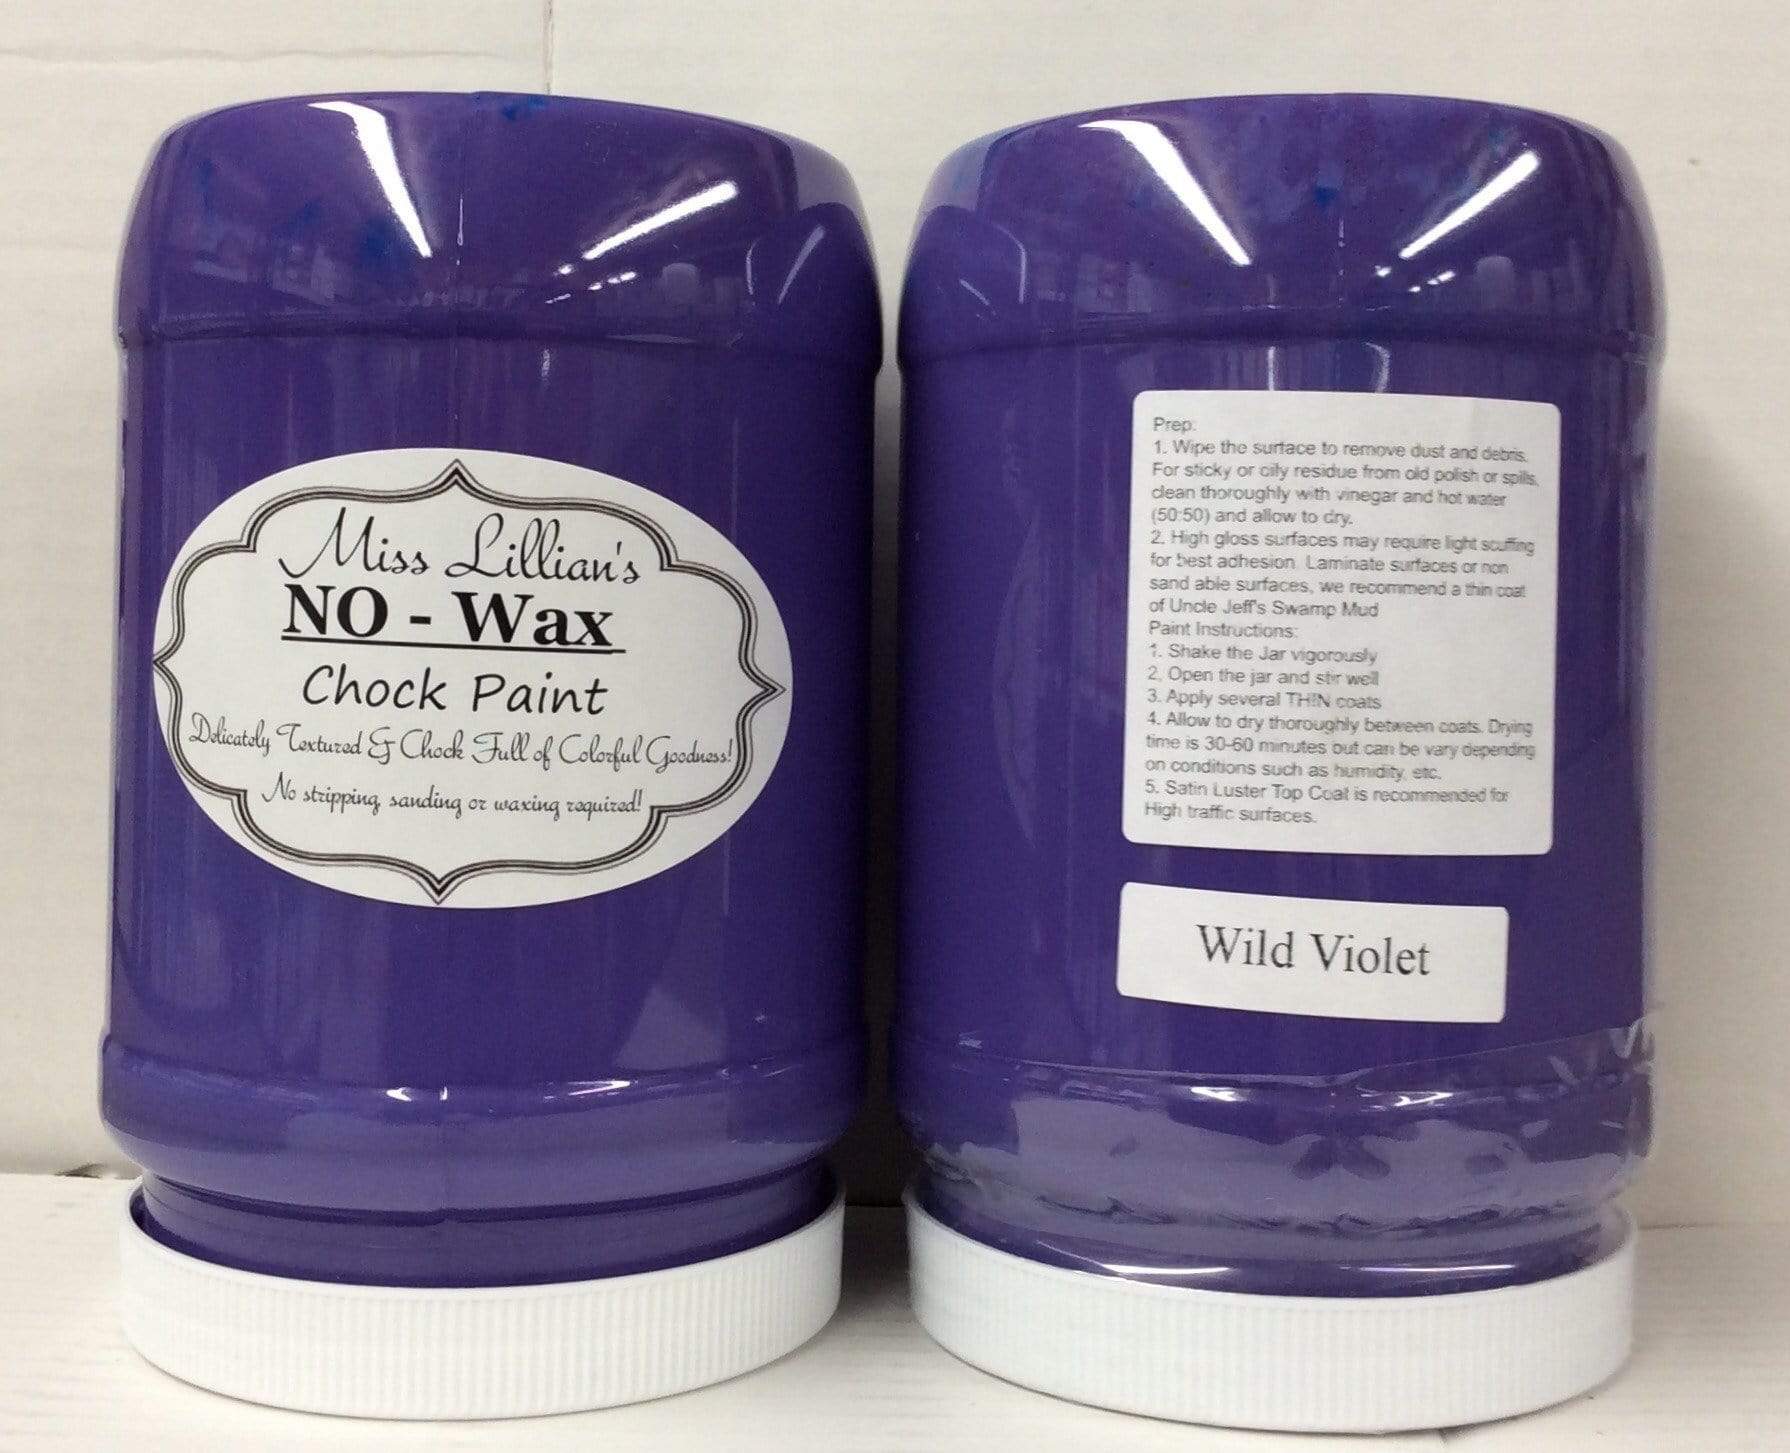 Miss Lillians Chock Paint Chock Paint Miss Lillian's NO WAX Chock Paint - Wild Violet